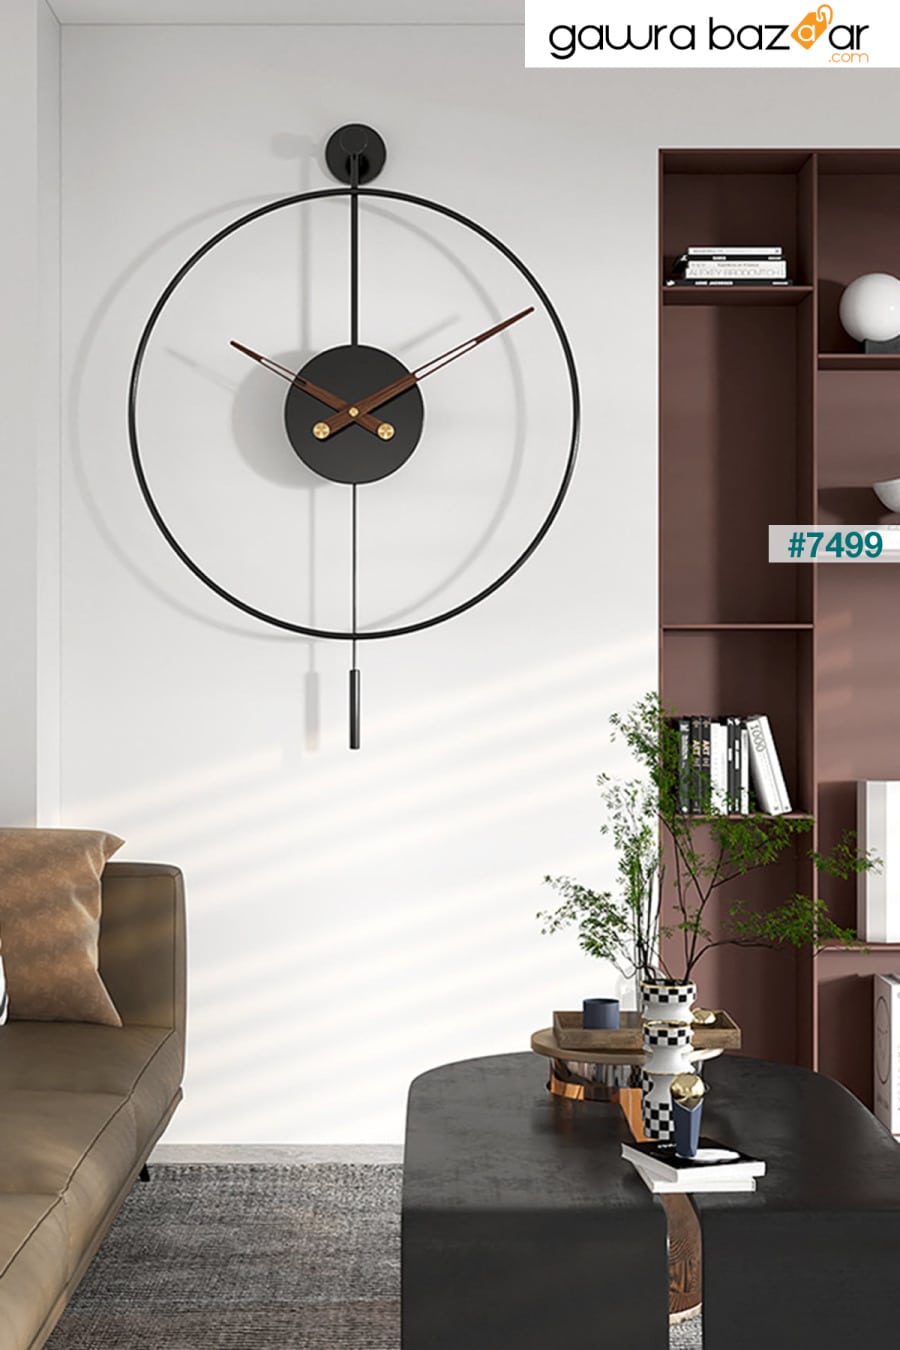 Tiktok Plus 60 سم أسود ، ساعة حائط معدنية مزخرفة حديثة بندول AGA KONSEPT 0